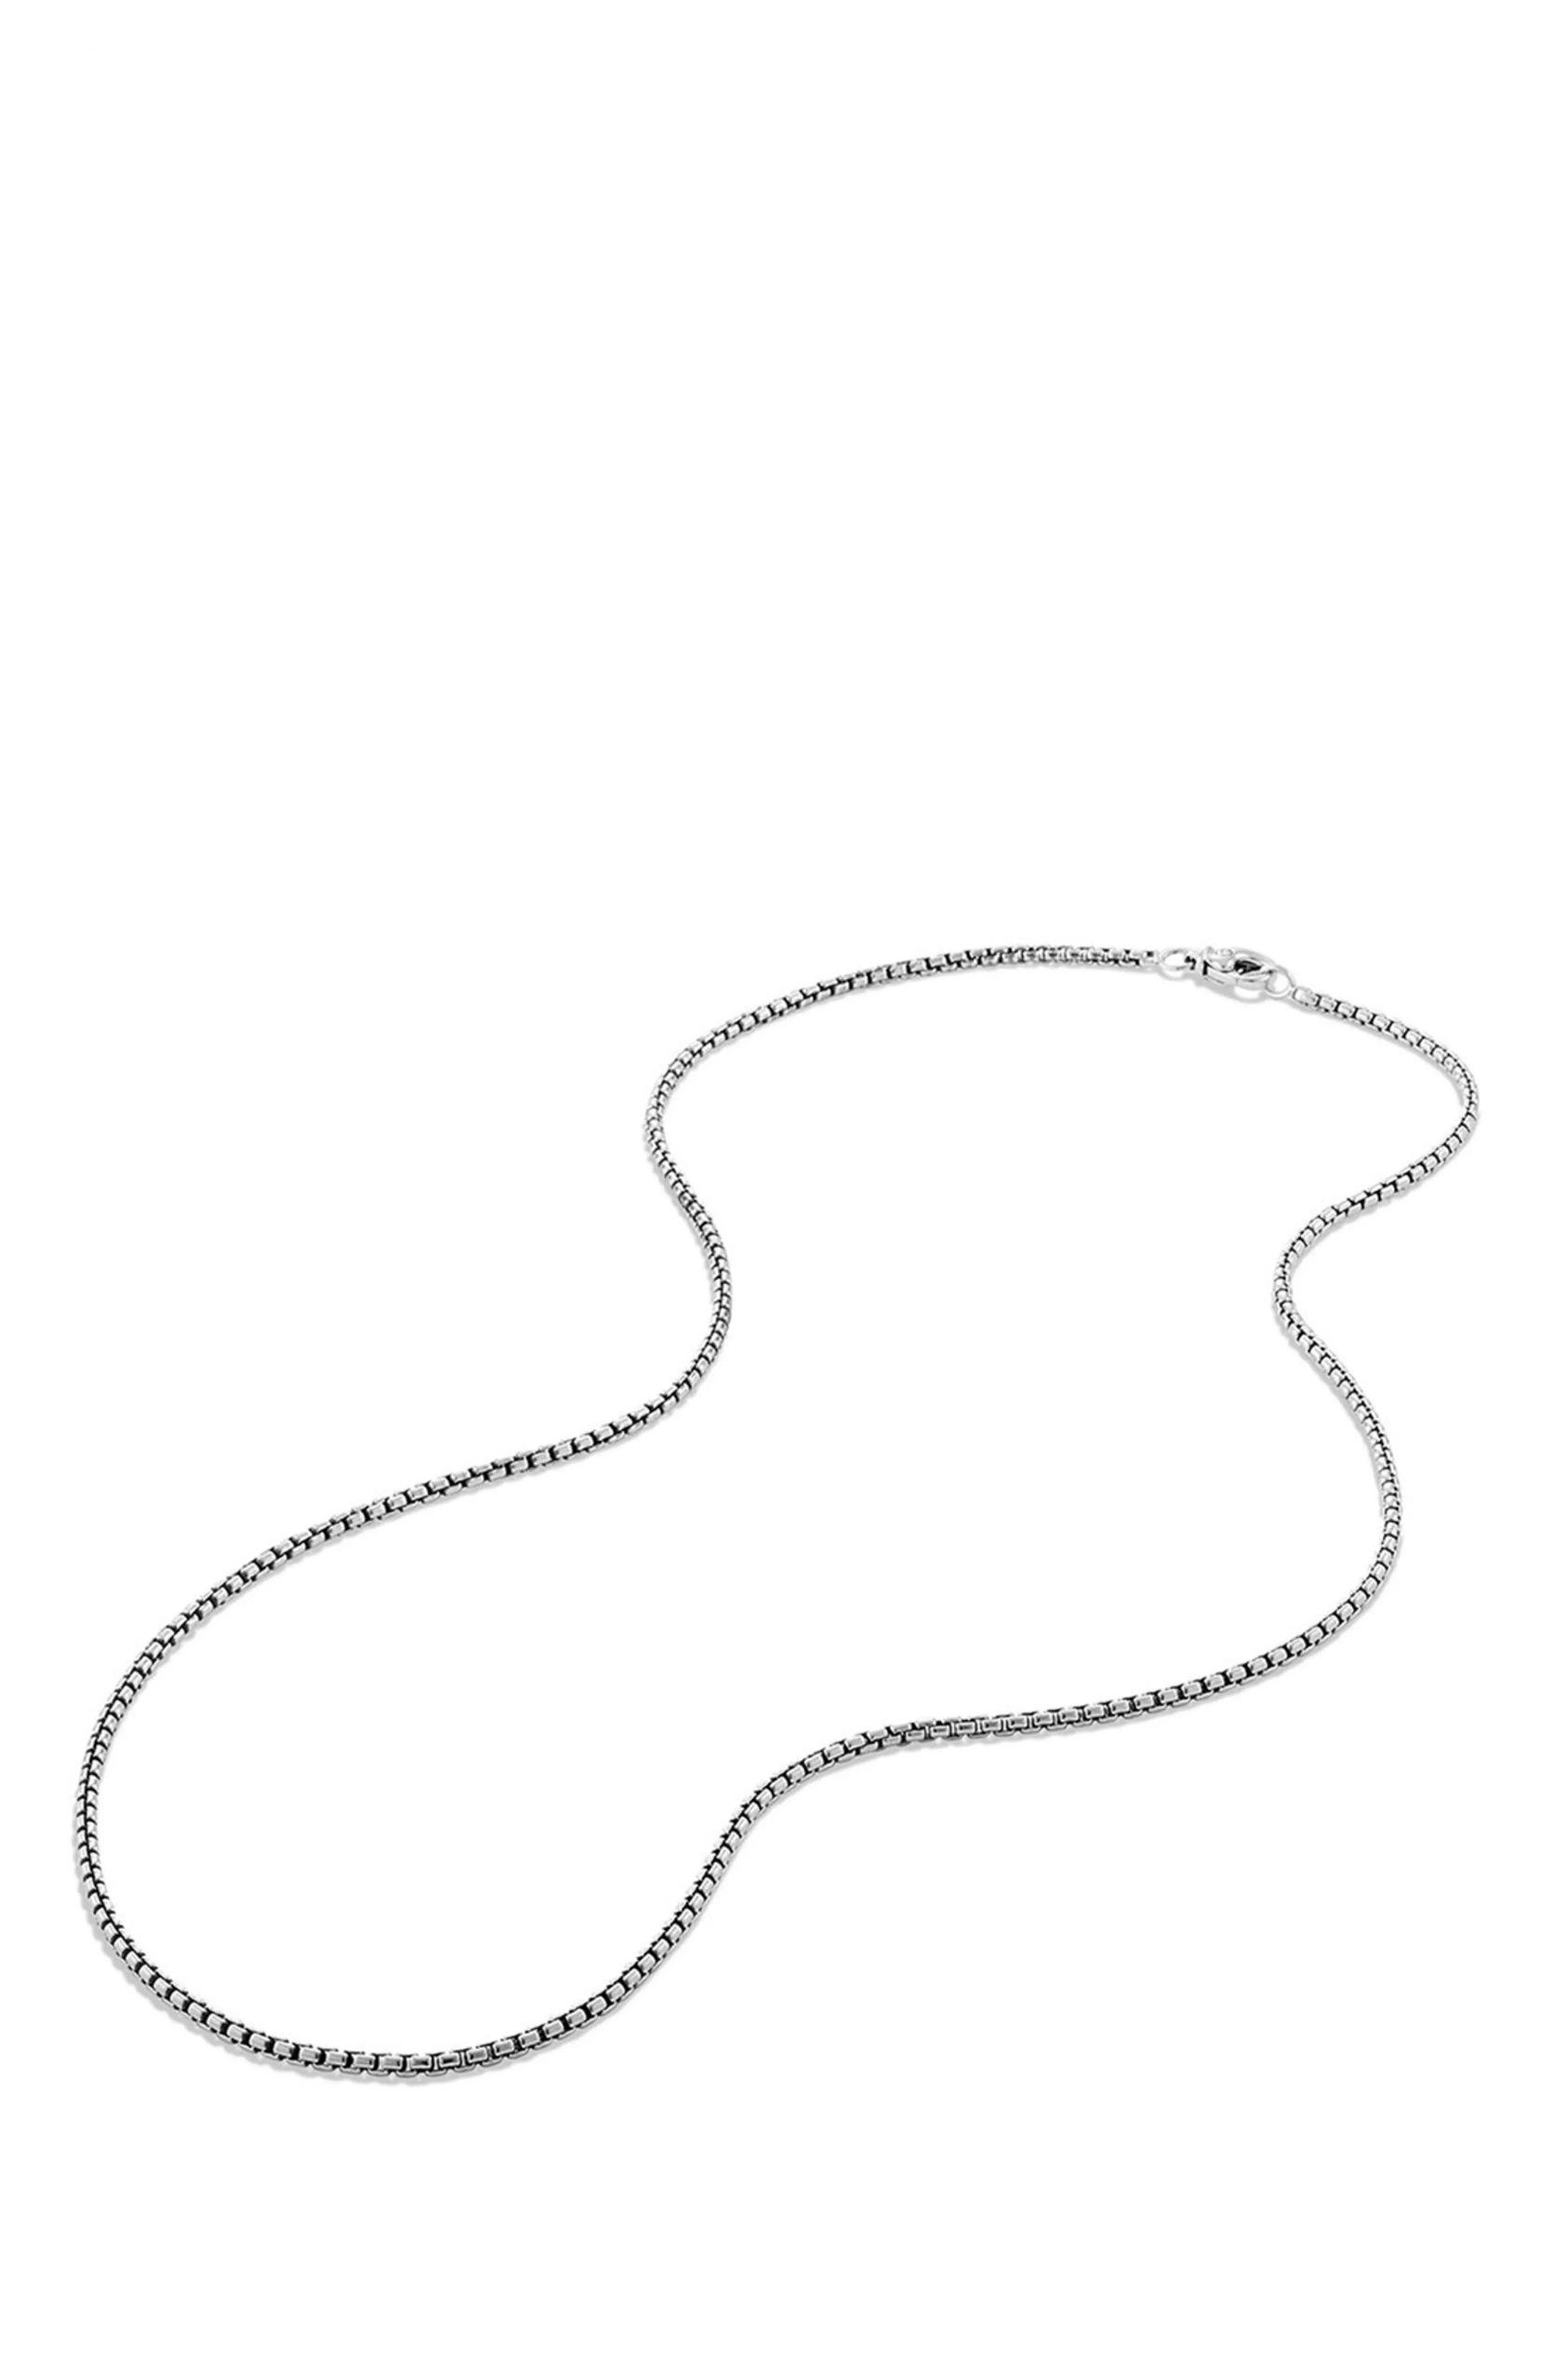 David Yurman Small Box Chain Necklace